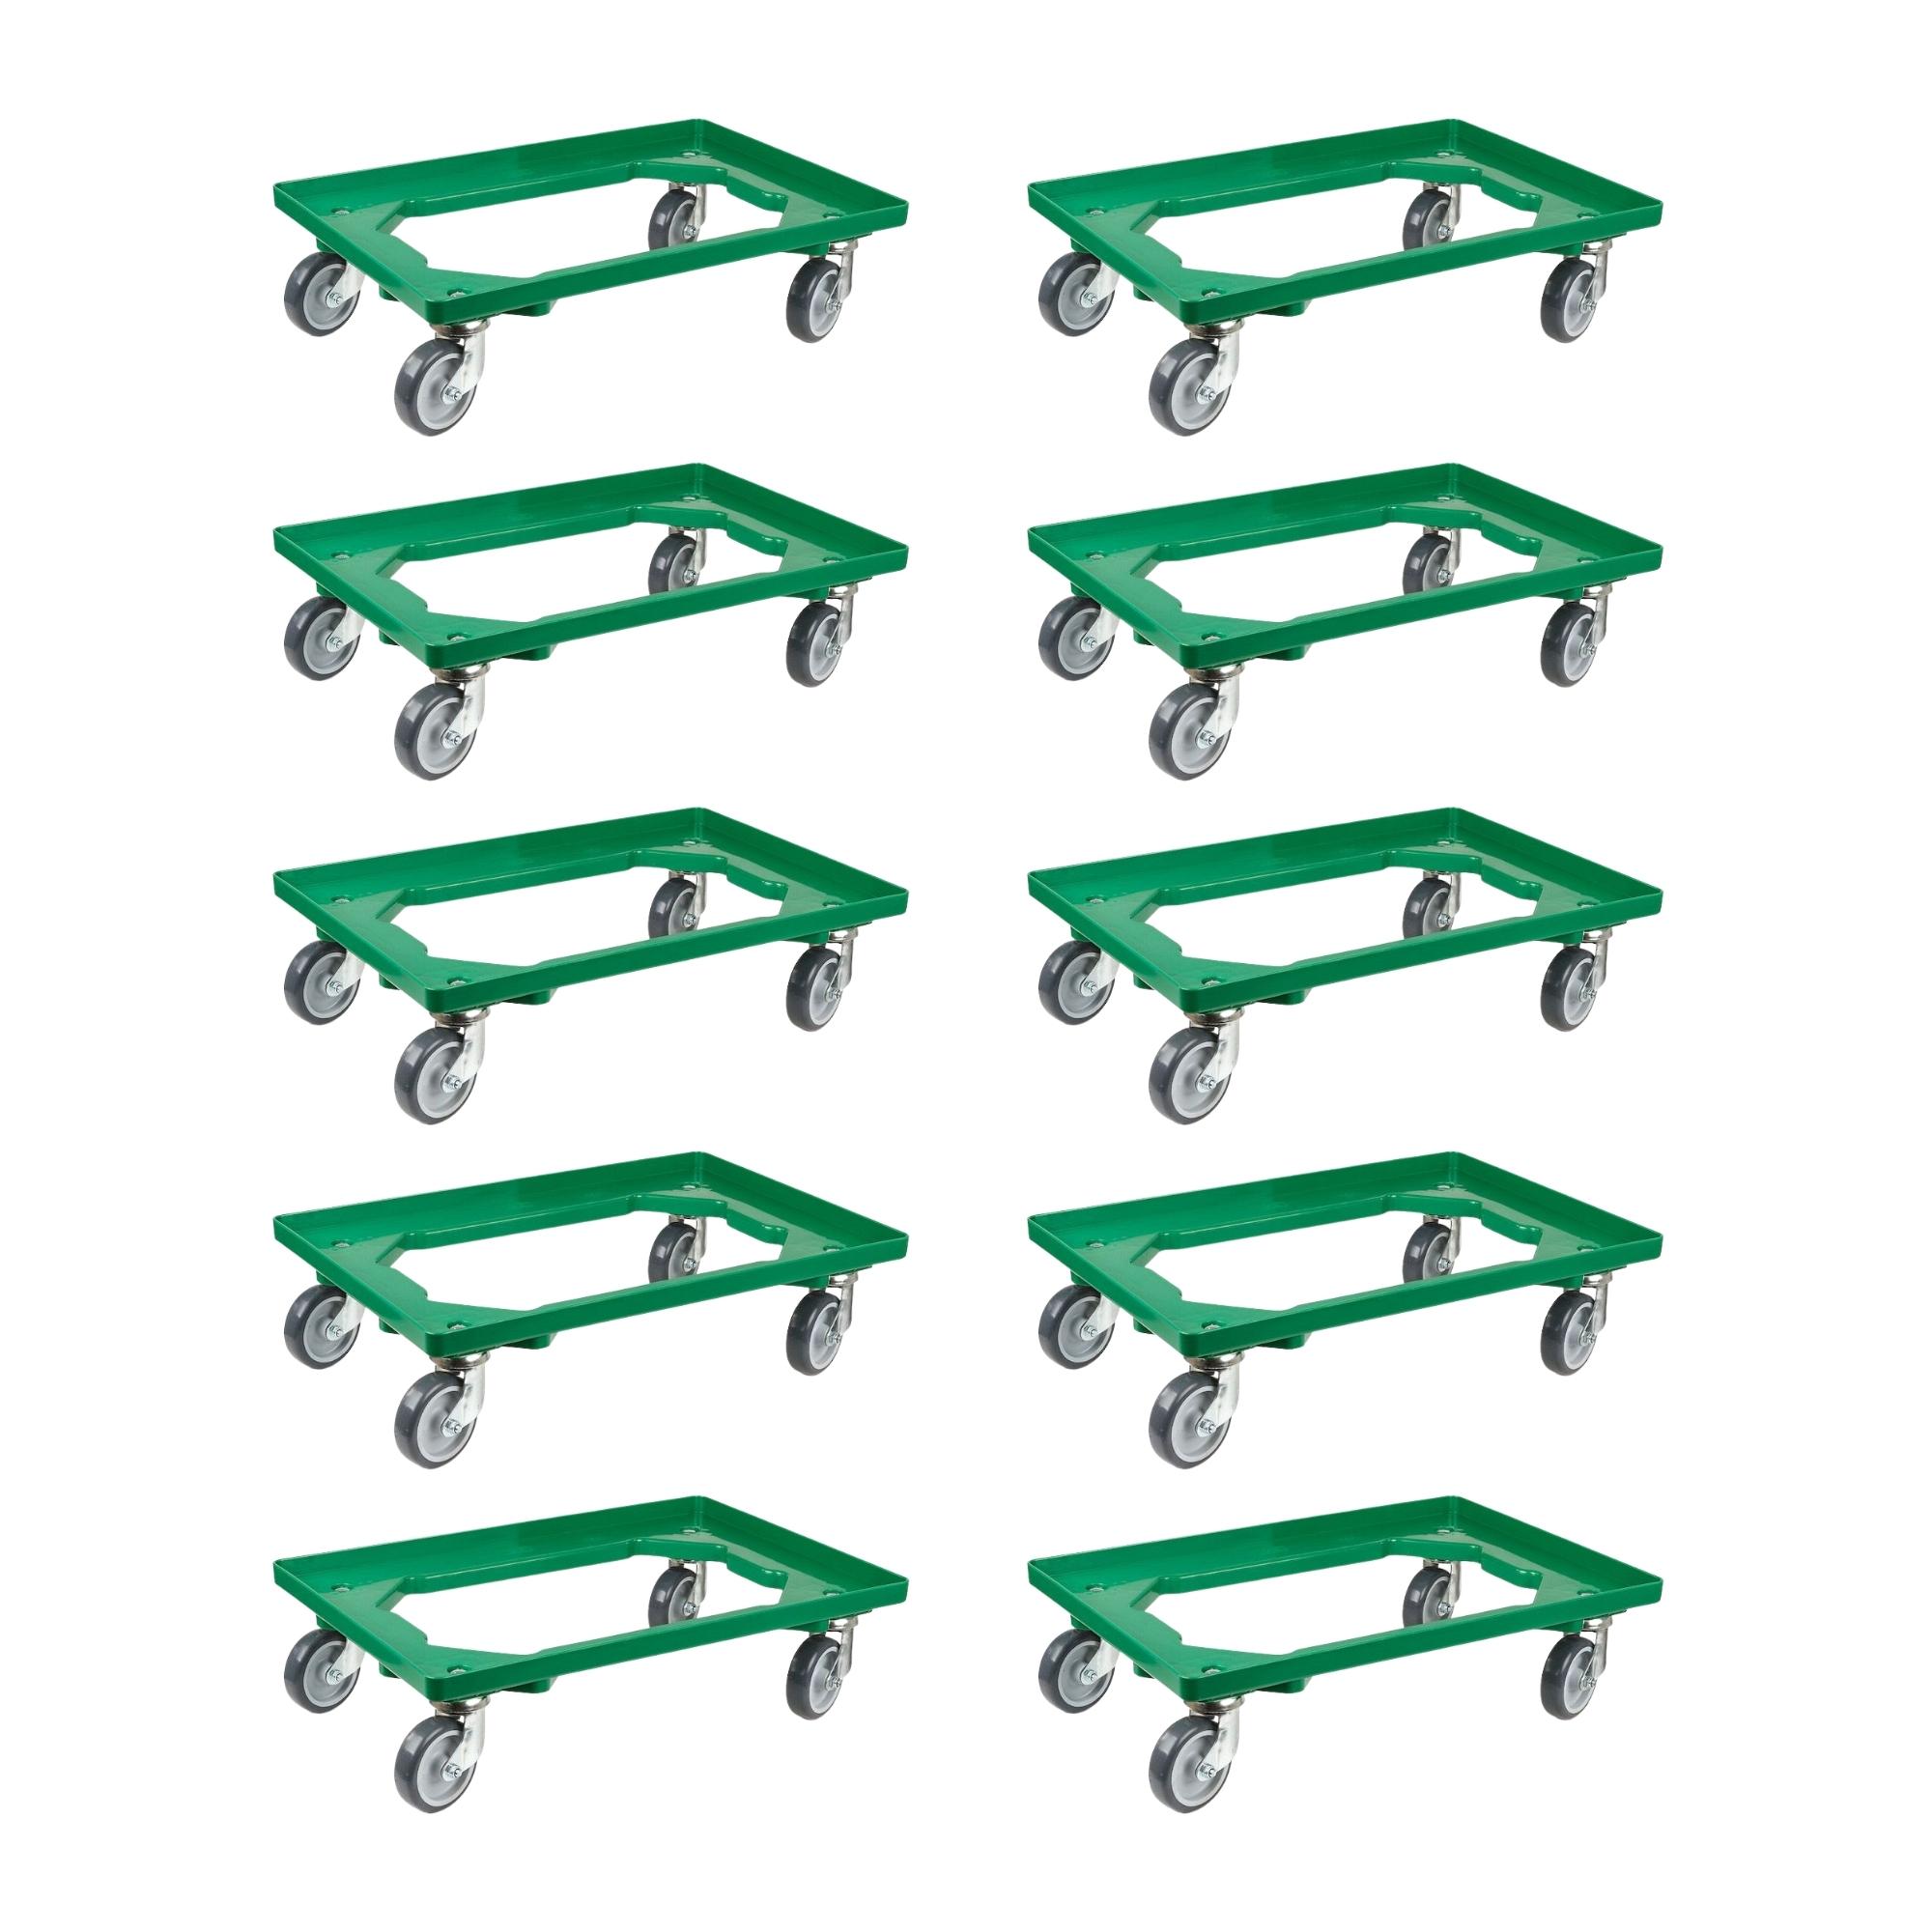 SparSet 10x Transportroller für Euroboxen 60x40cm mit Gummiräder grün | Offenes Deck | 2 Lenkrollen & 2 Bremsrollen | Traglast 300kg | Kistenroller Logistikroller Rollwagen Profi-Fahrgestell